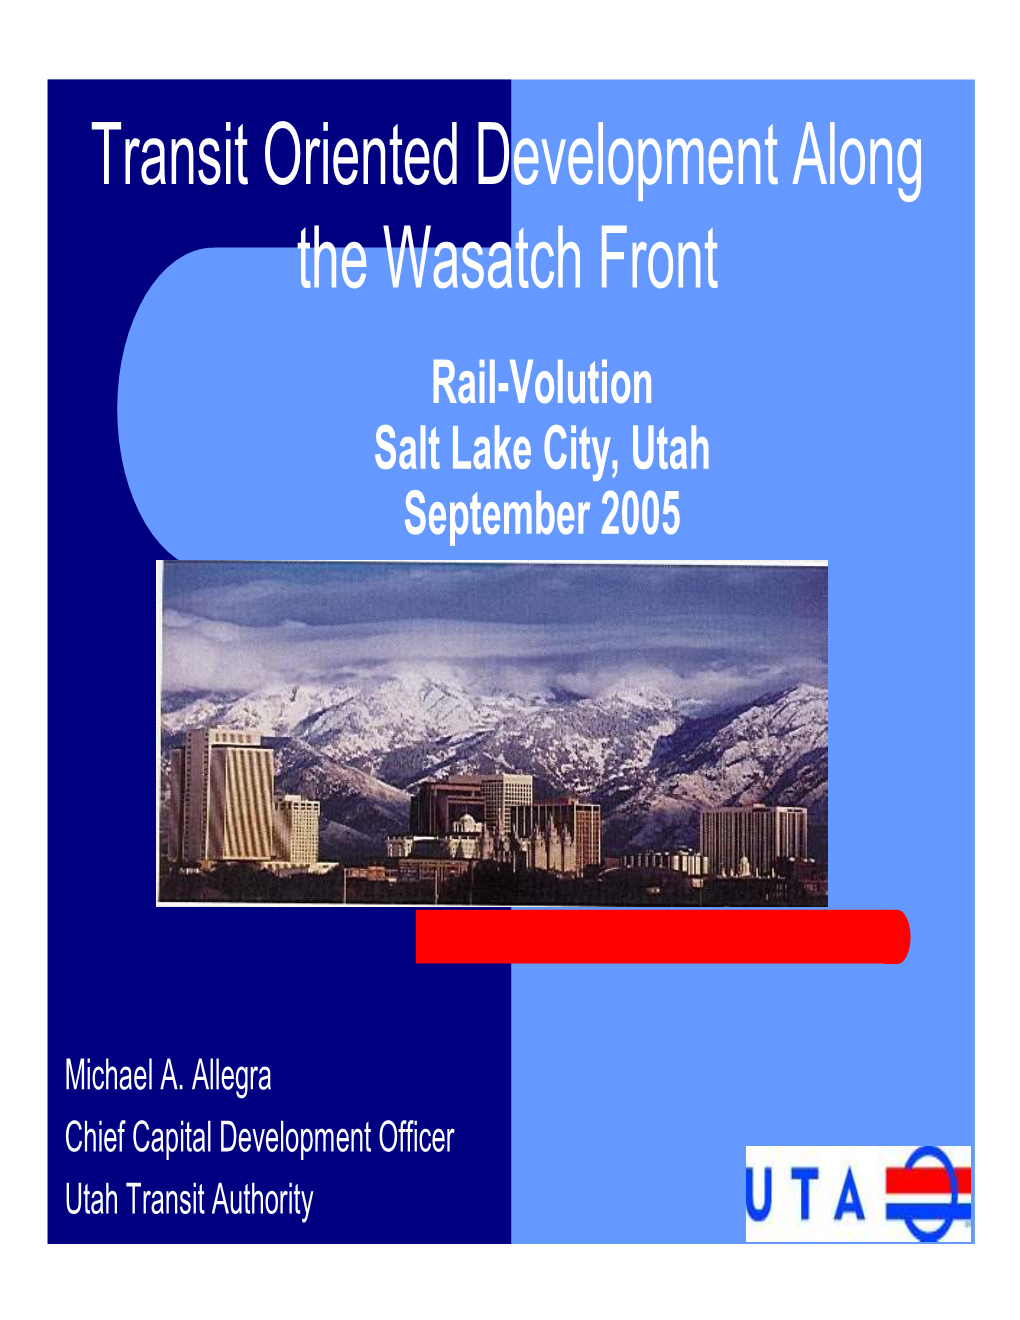 Transit Oriented Development Along the Wasatch Front Rail-Volution Salt Lake City, Utah September 2005